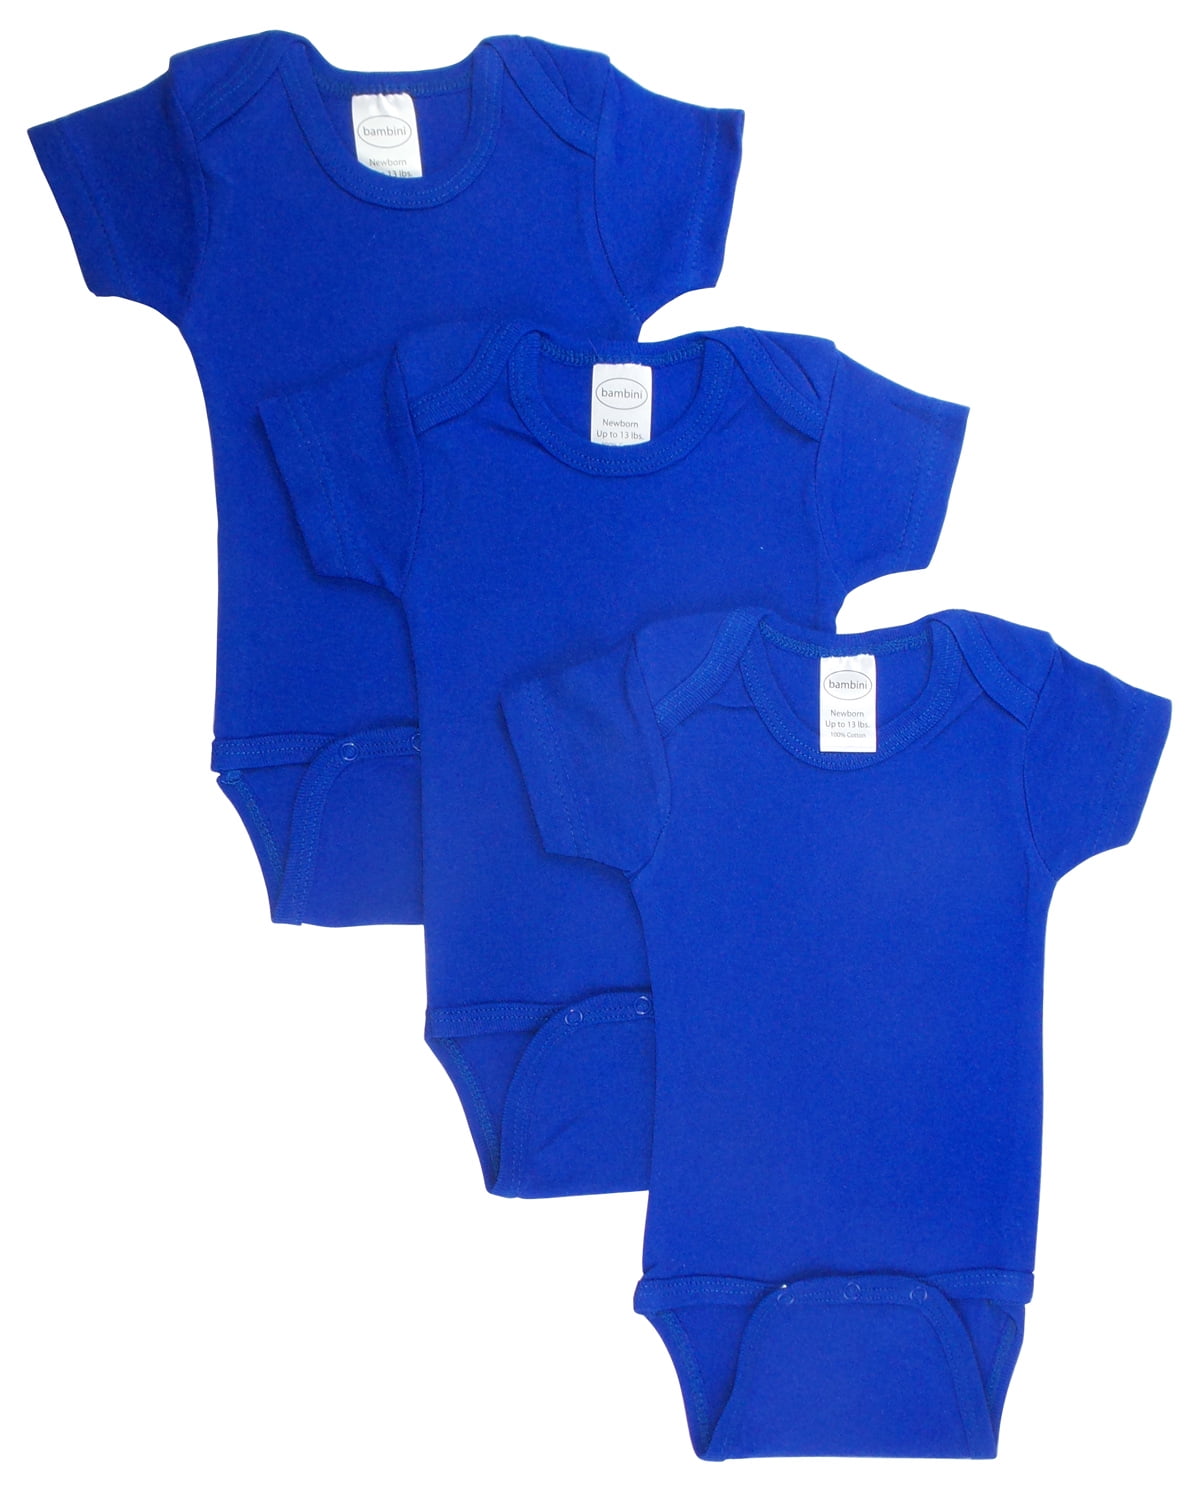 Ls-0165 Short Sleeve Bodysuit - Blue, Large - Pack Of 3